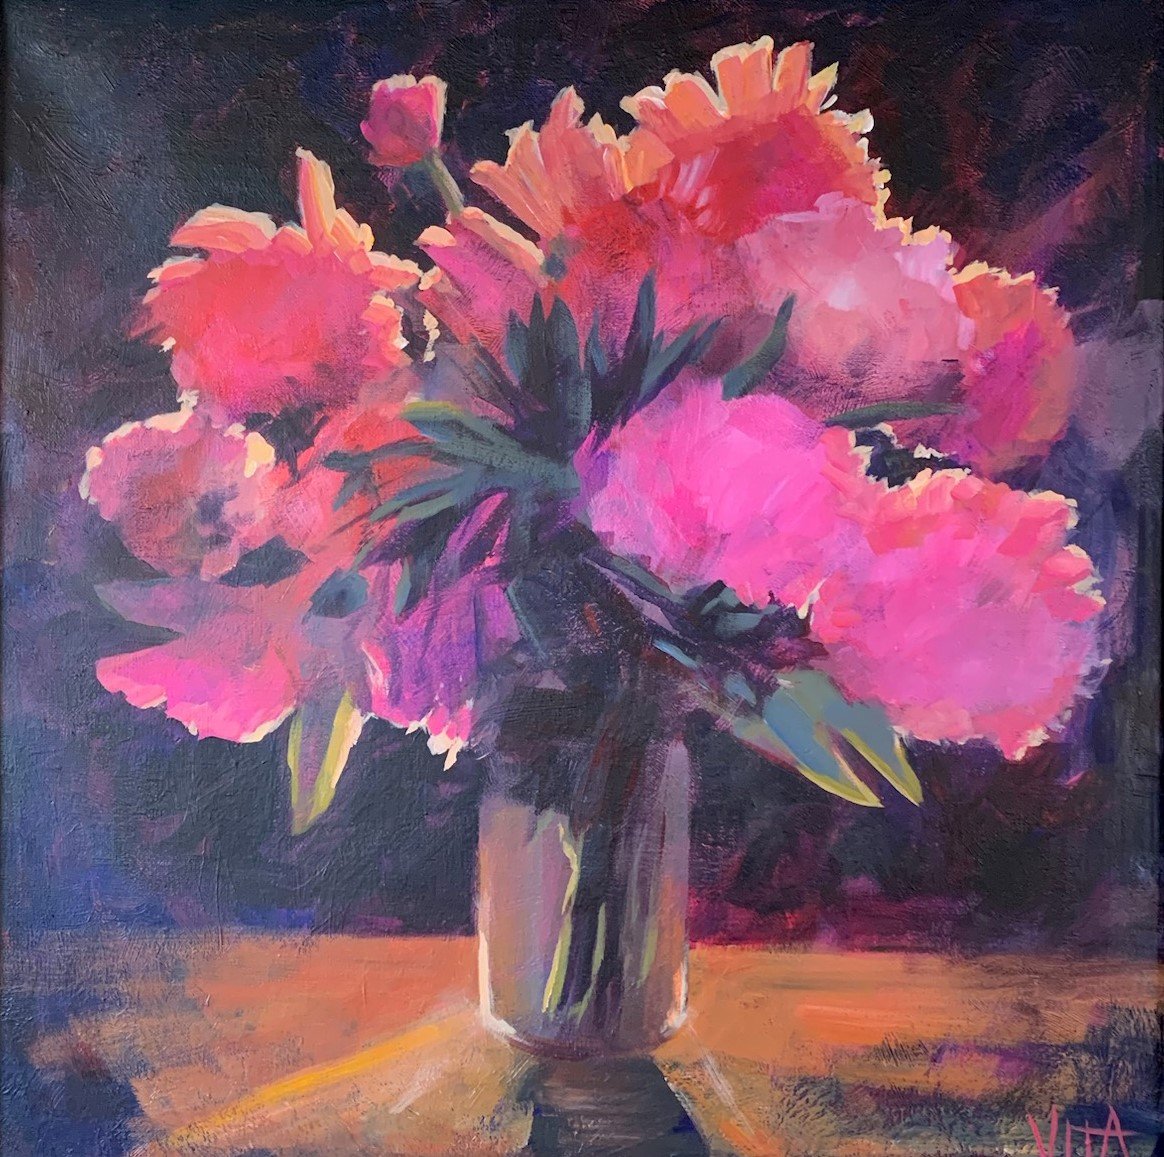 SOLD, Highlights on Flowers, Acrylic on Canvas, Copyright 2023 Hirschten